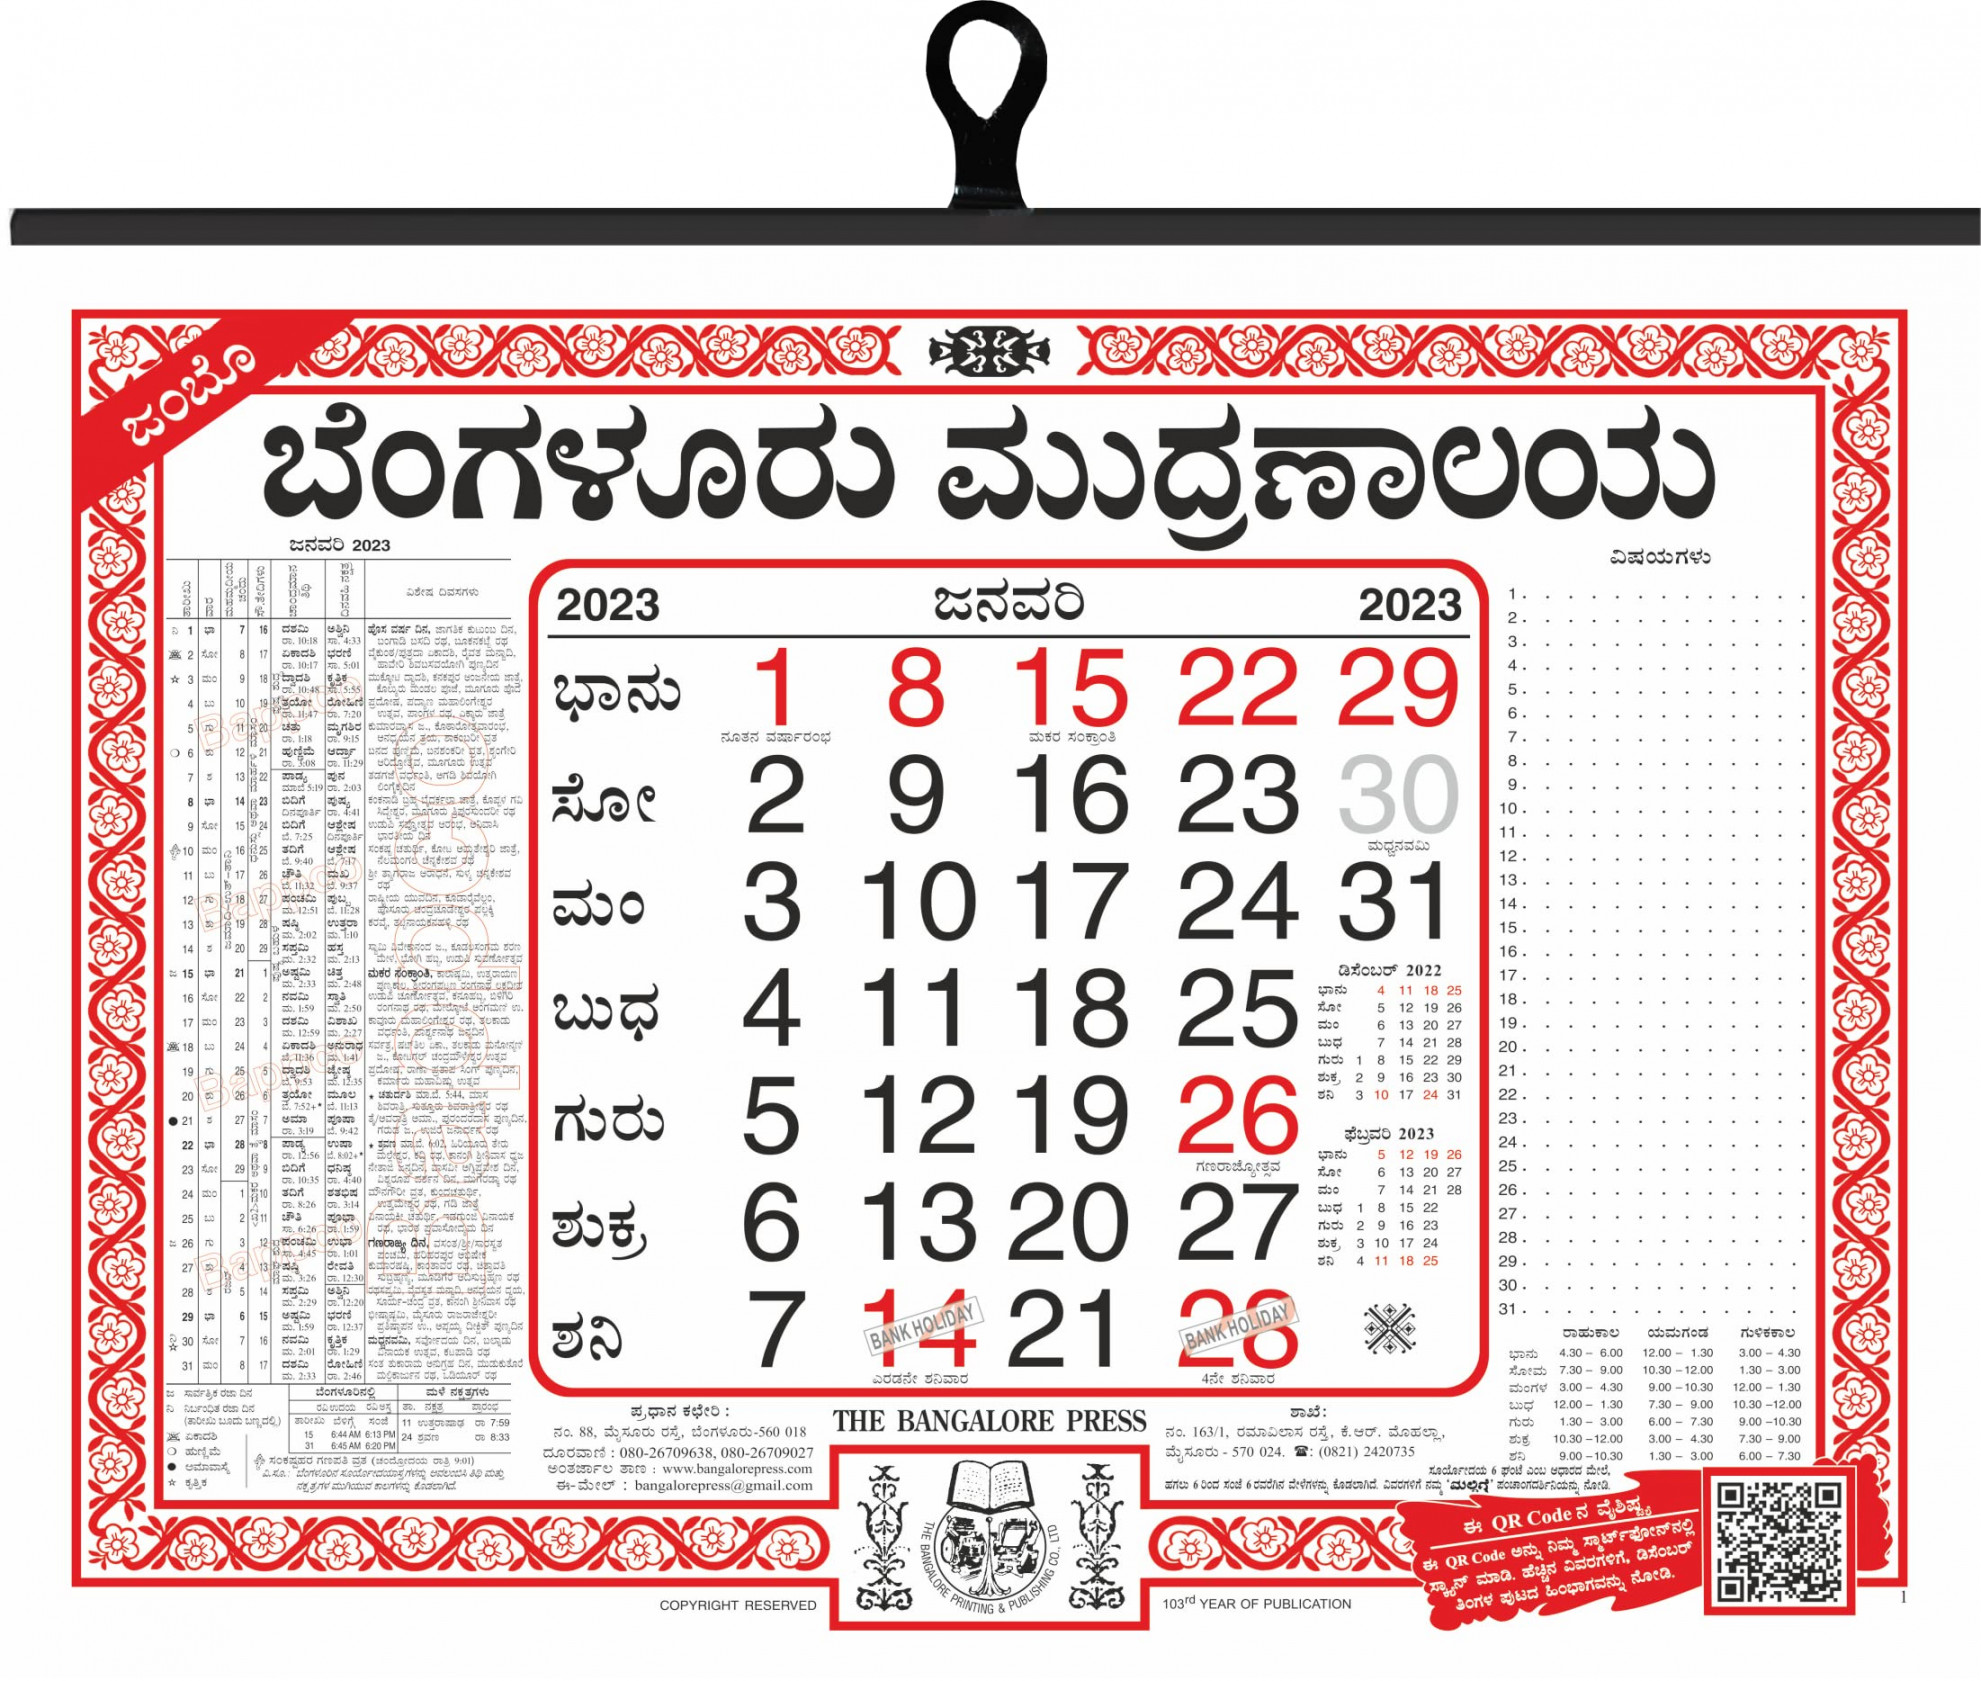 THE BANGALORE PRESS Kannada Combination of Calendars -  (Jumbo